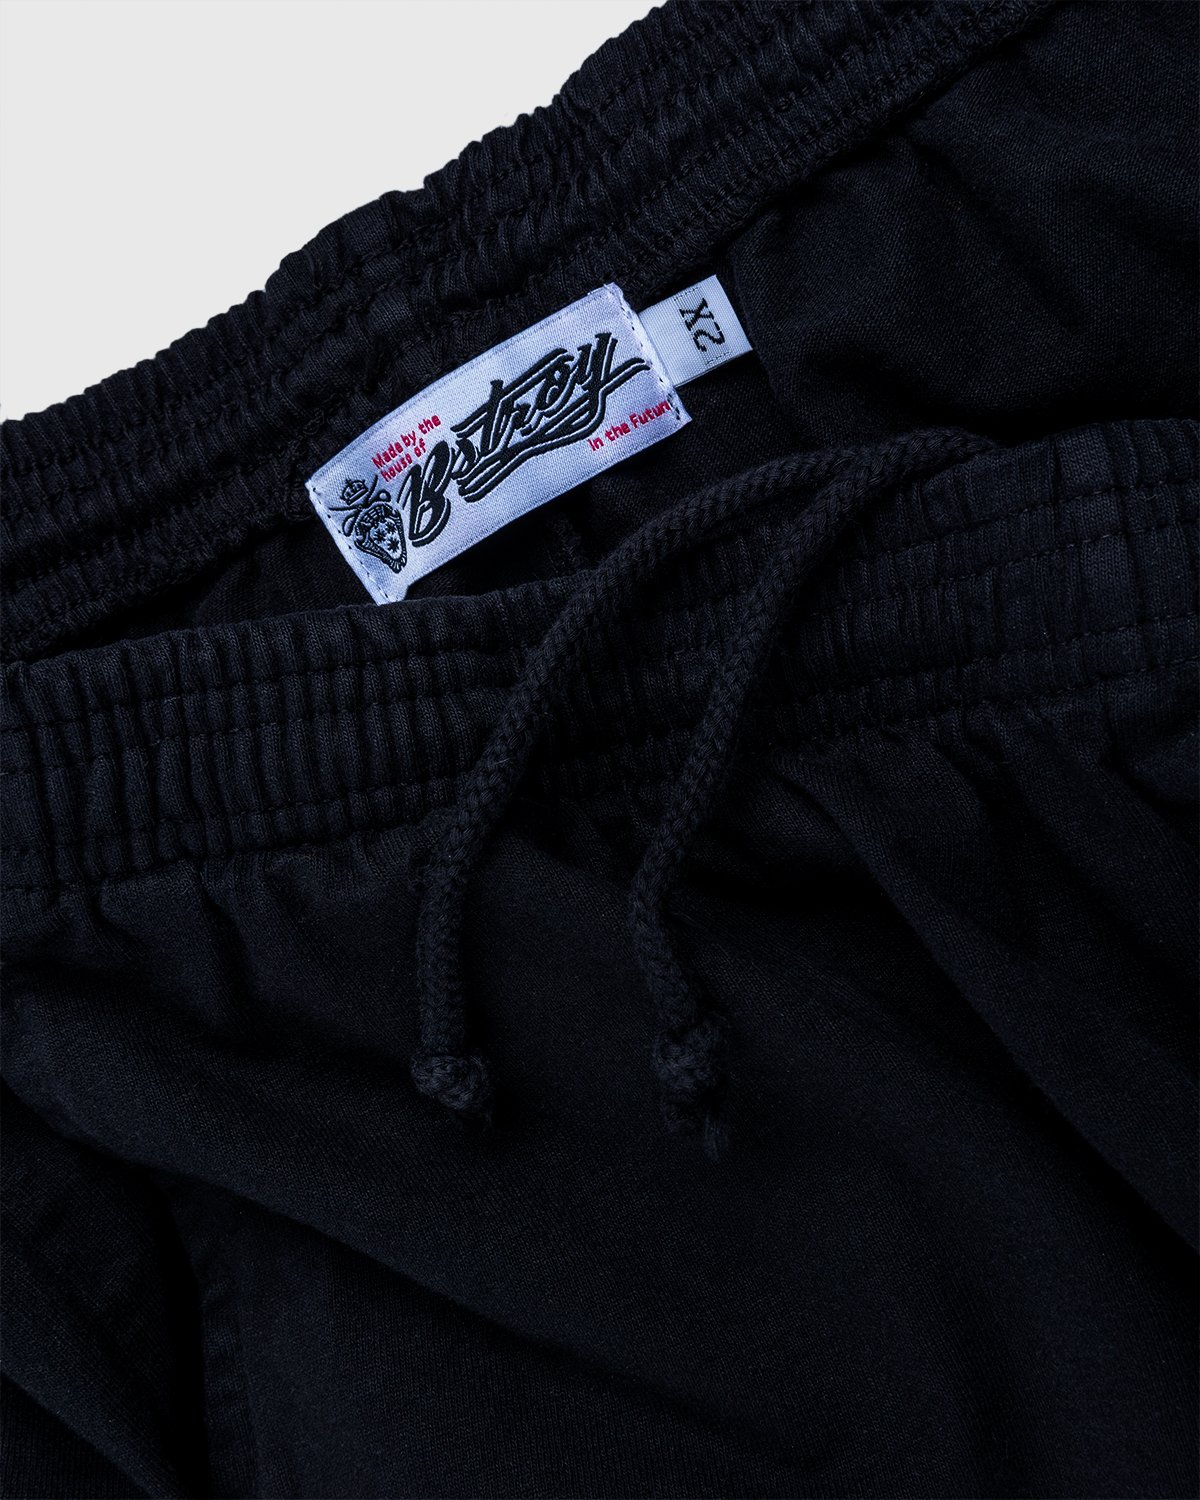 Bstroy x Highsnobiety - Shorts Black - Clothing - Black - Image 6